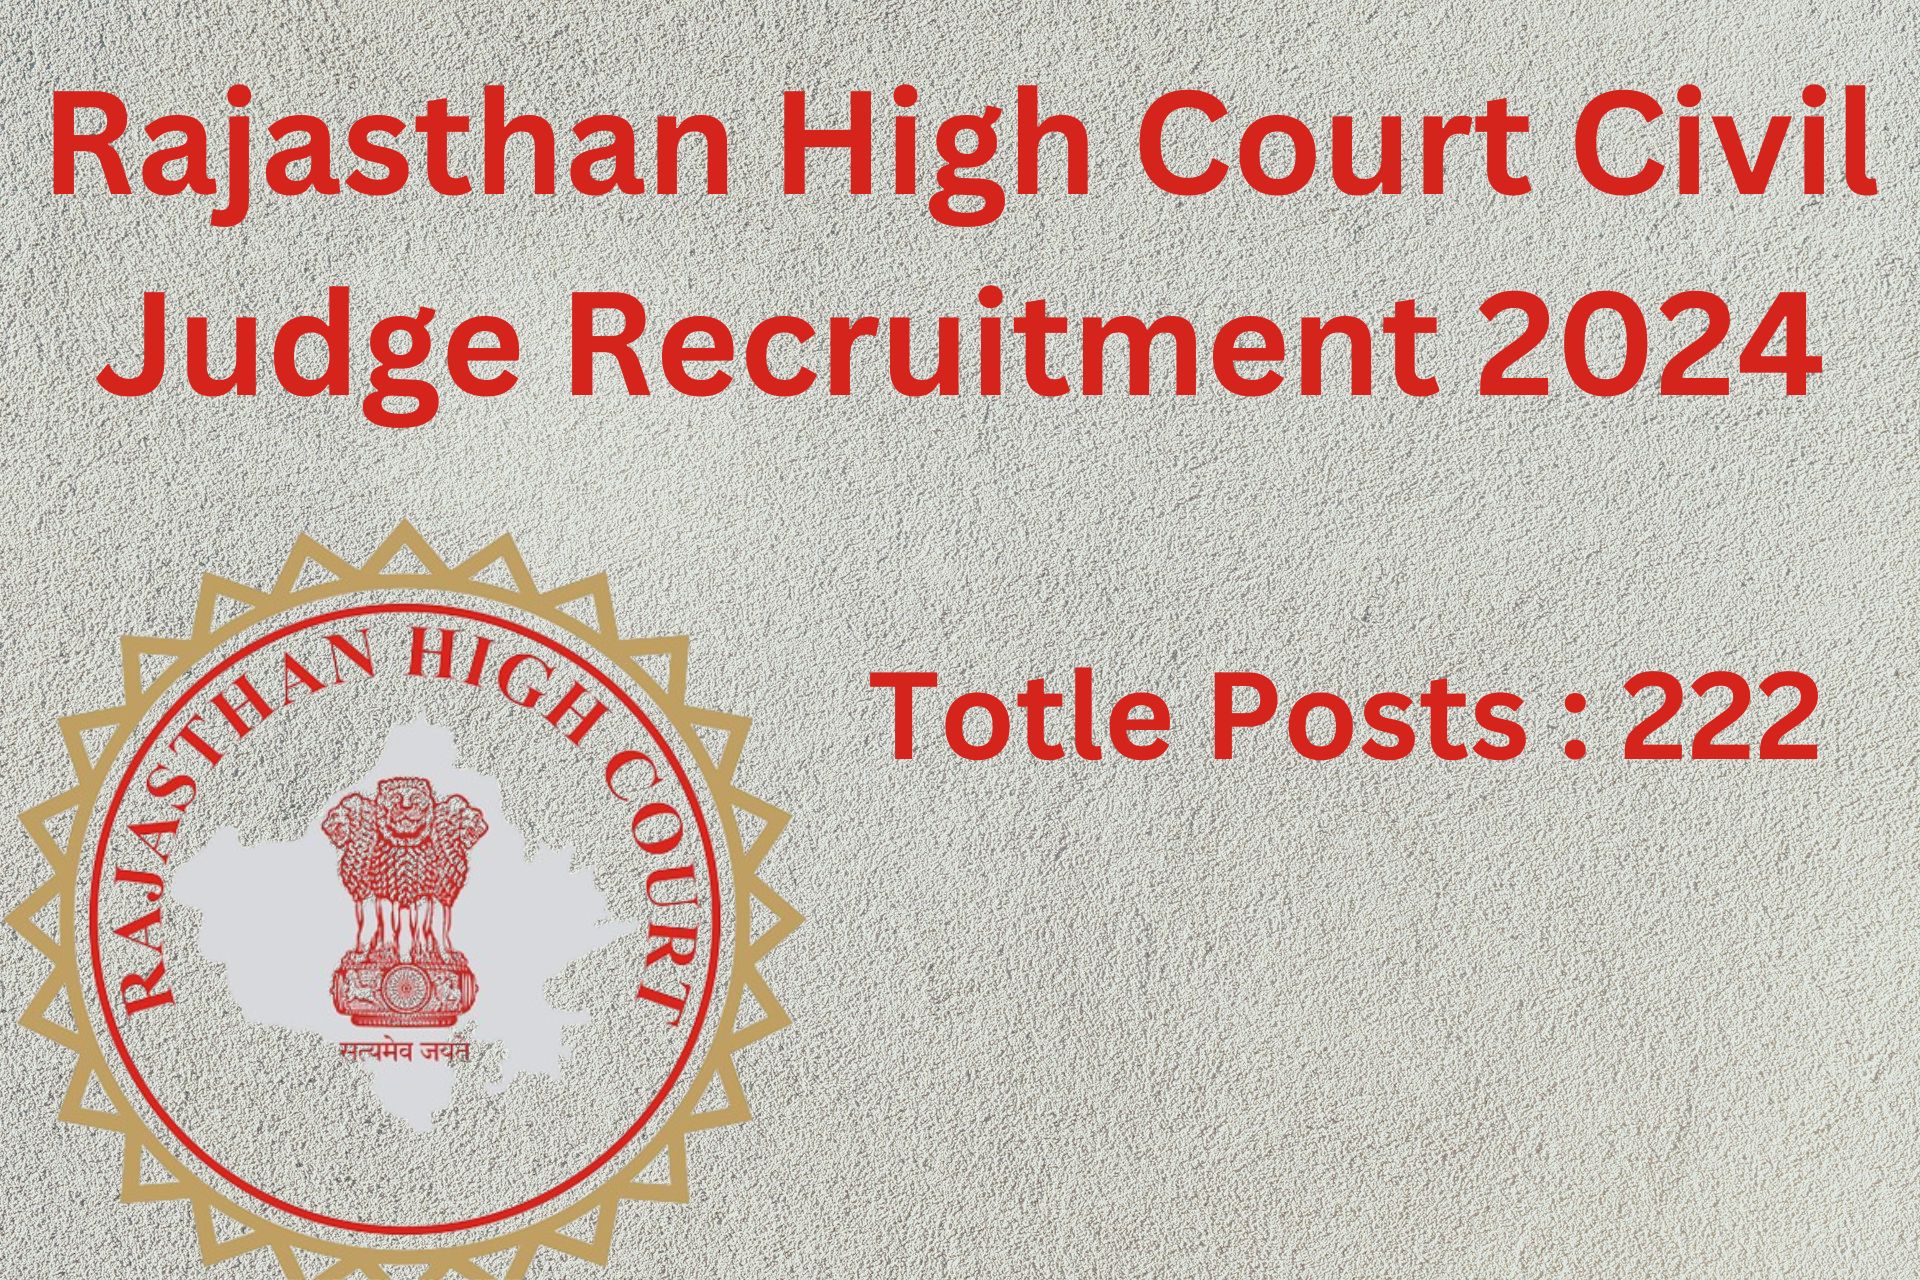 Rajasthan High Court Civil Judge Recruitment Notification 2024